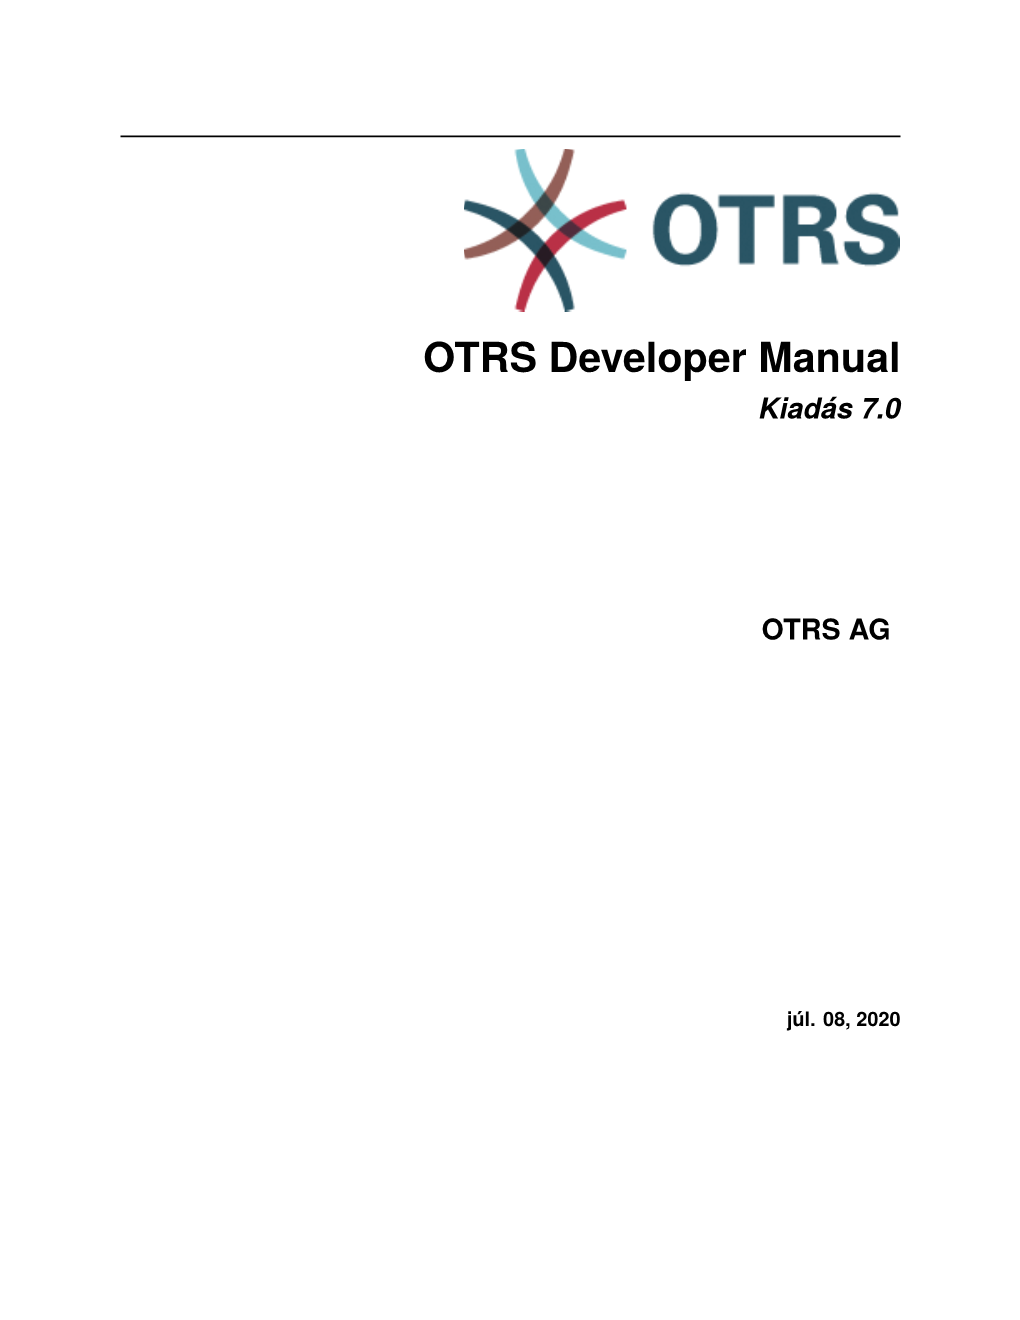 OTRS Developer Manual Kiadás 7.0